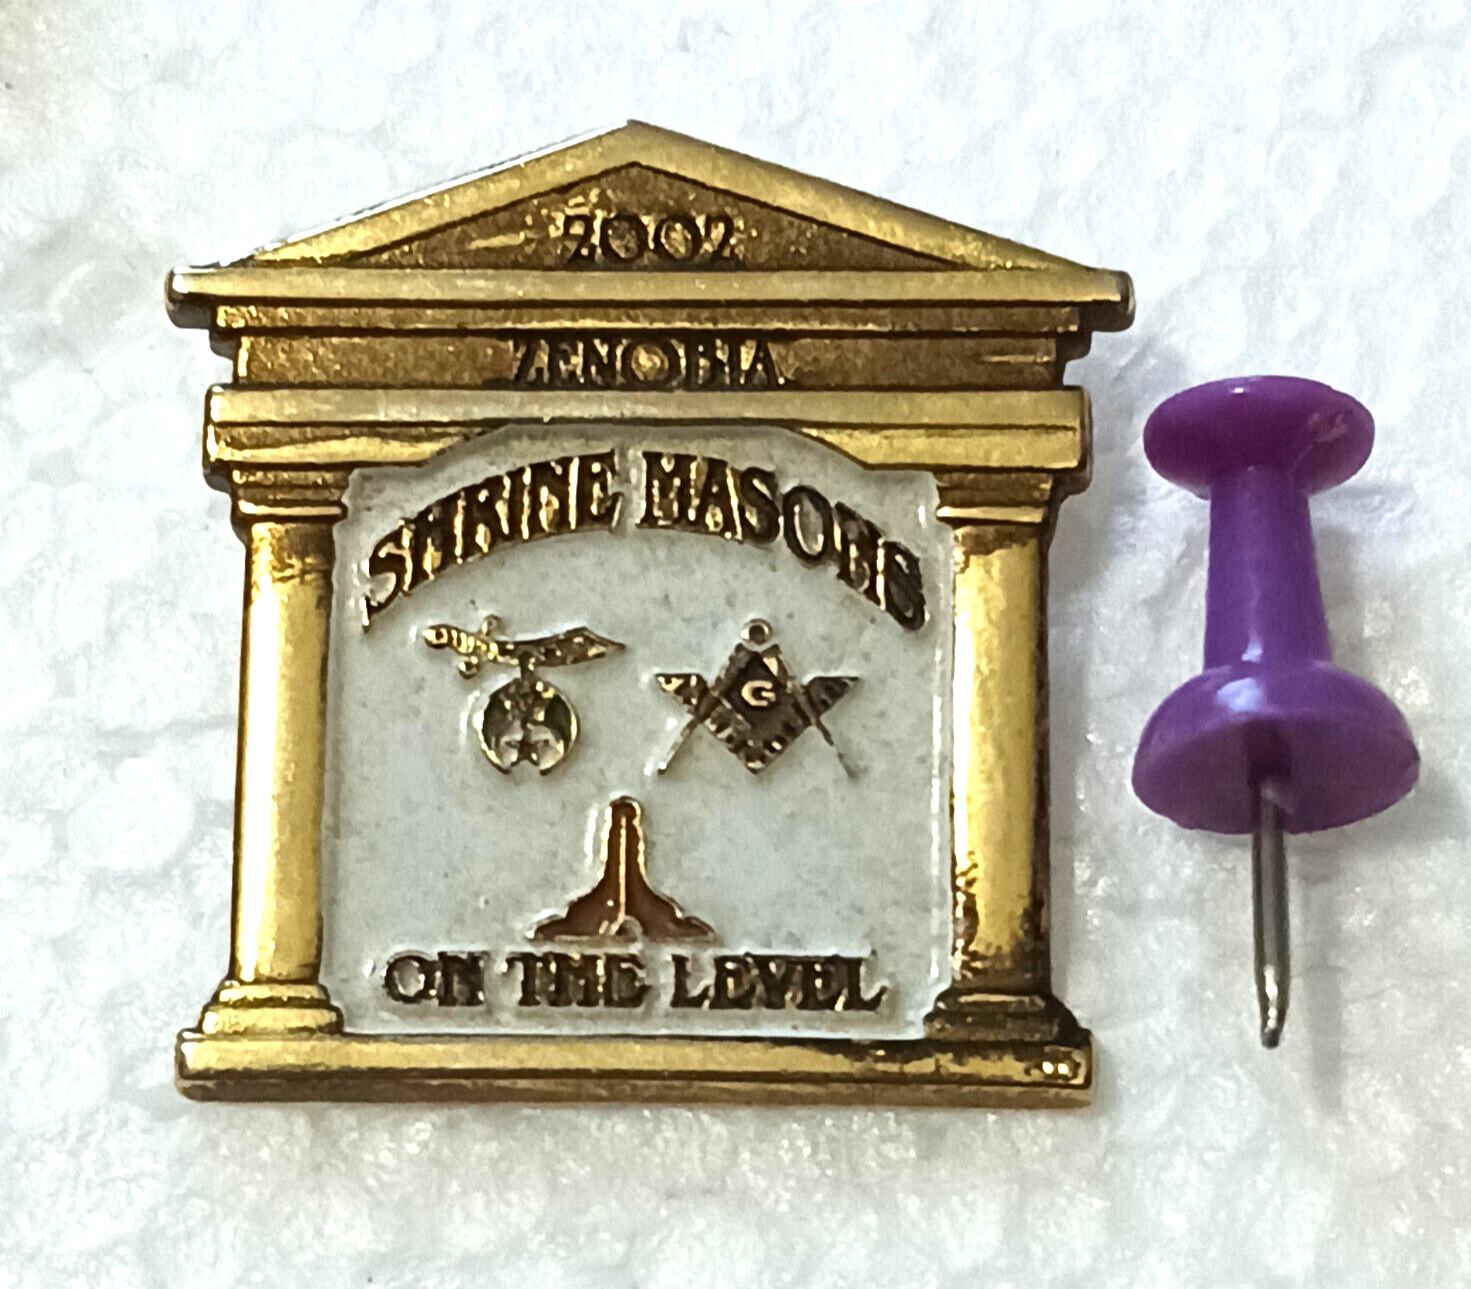 Masons Temple Pin - Freemason Shriner's Pin